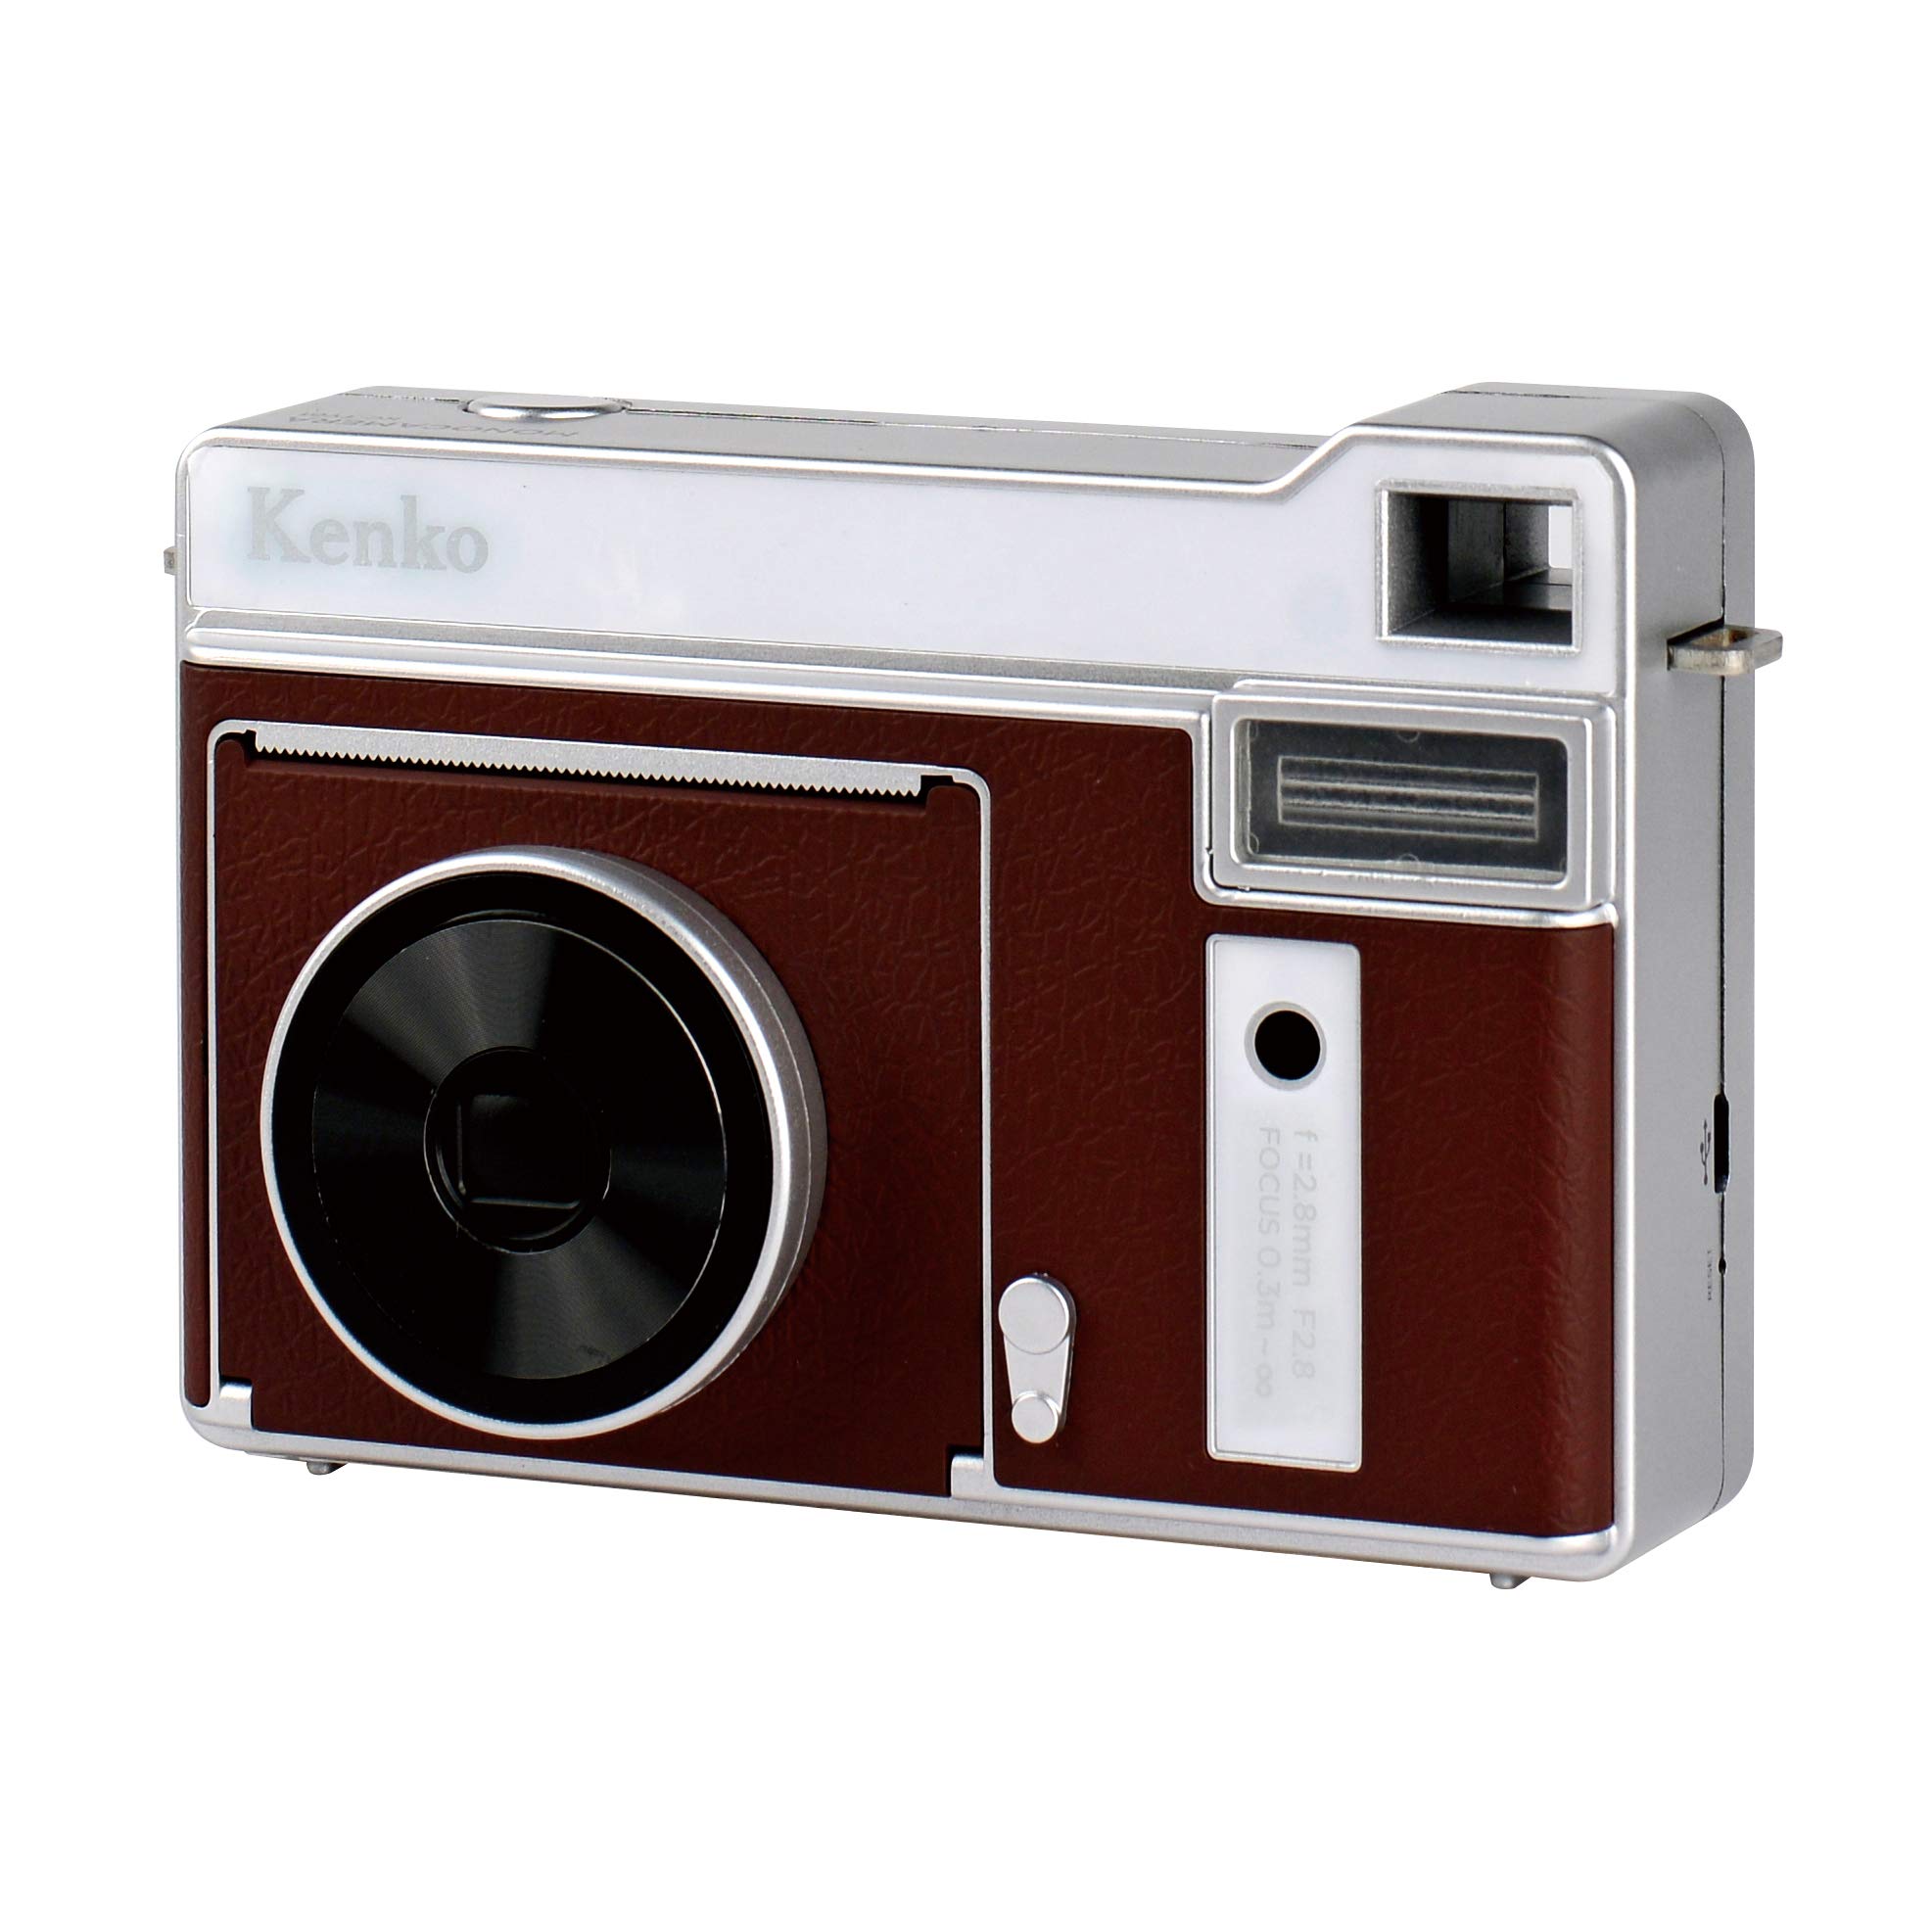 Kenko インスタントカメラ モノクロカメラ ブラウン 感熱紙使用 約80回プリント可能 microUSB充電 KC-T..